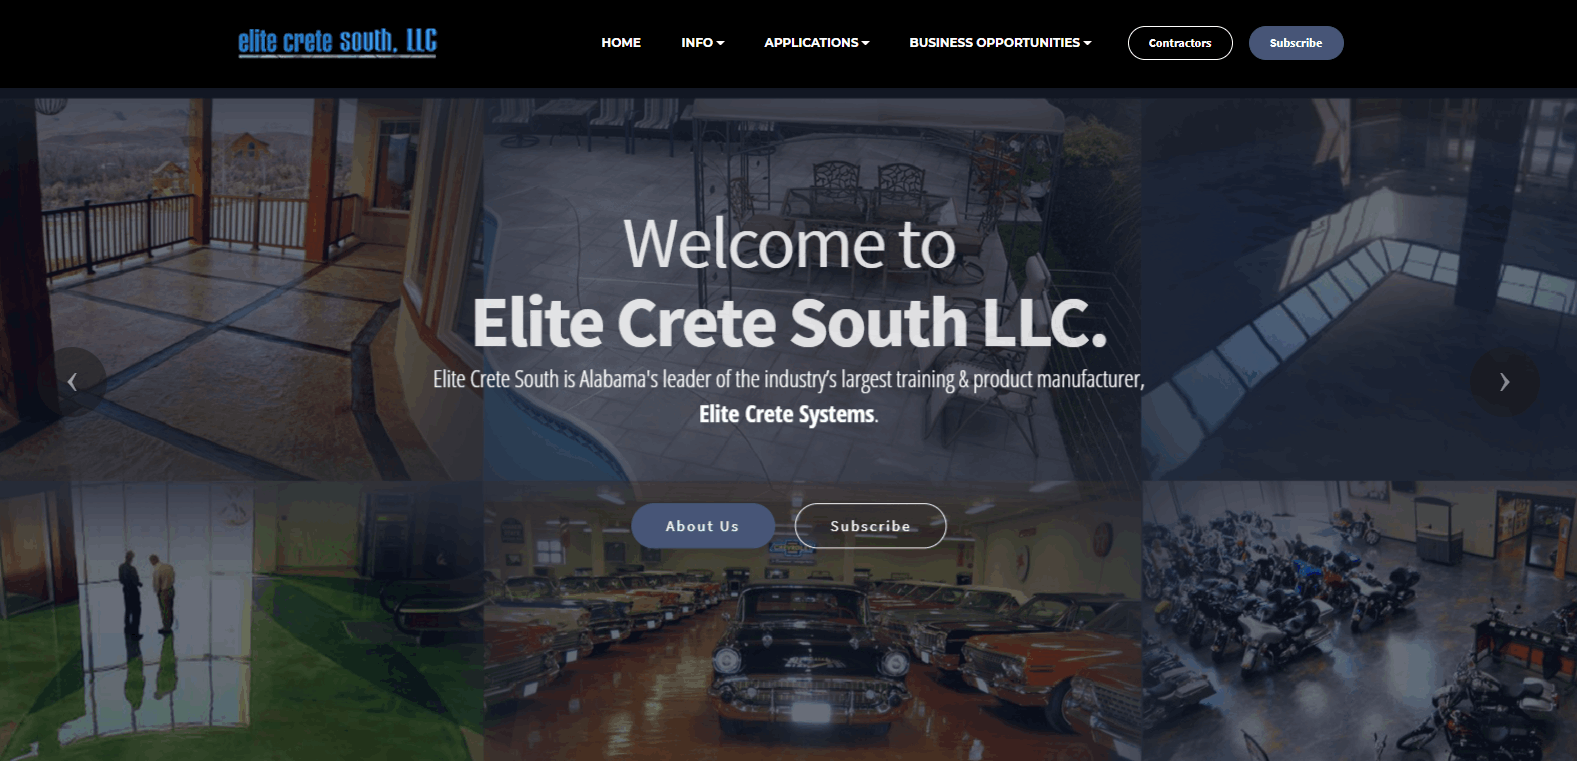 Elite Crete South LLC